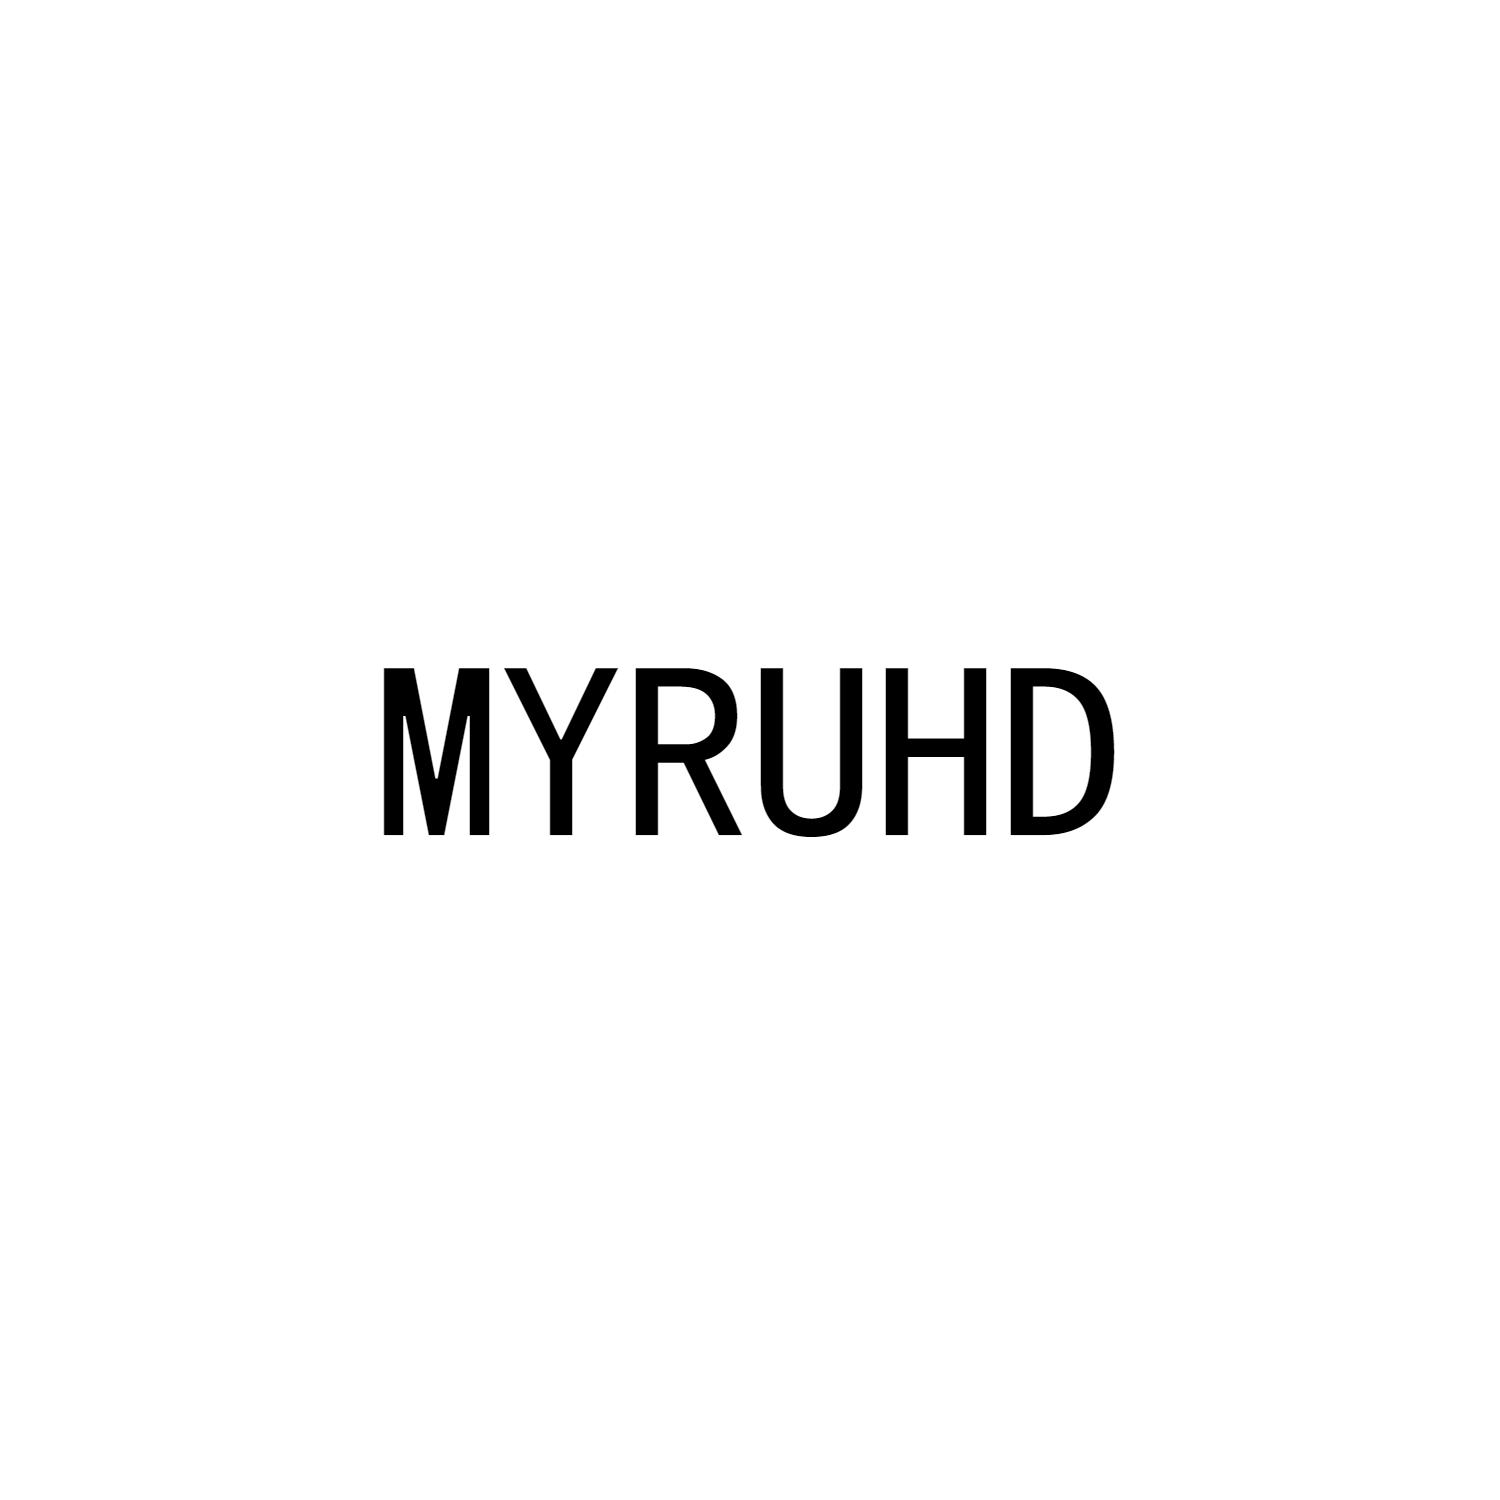 MYRUHD